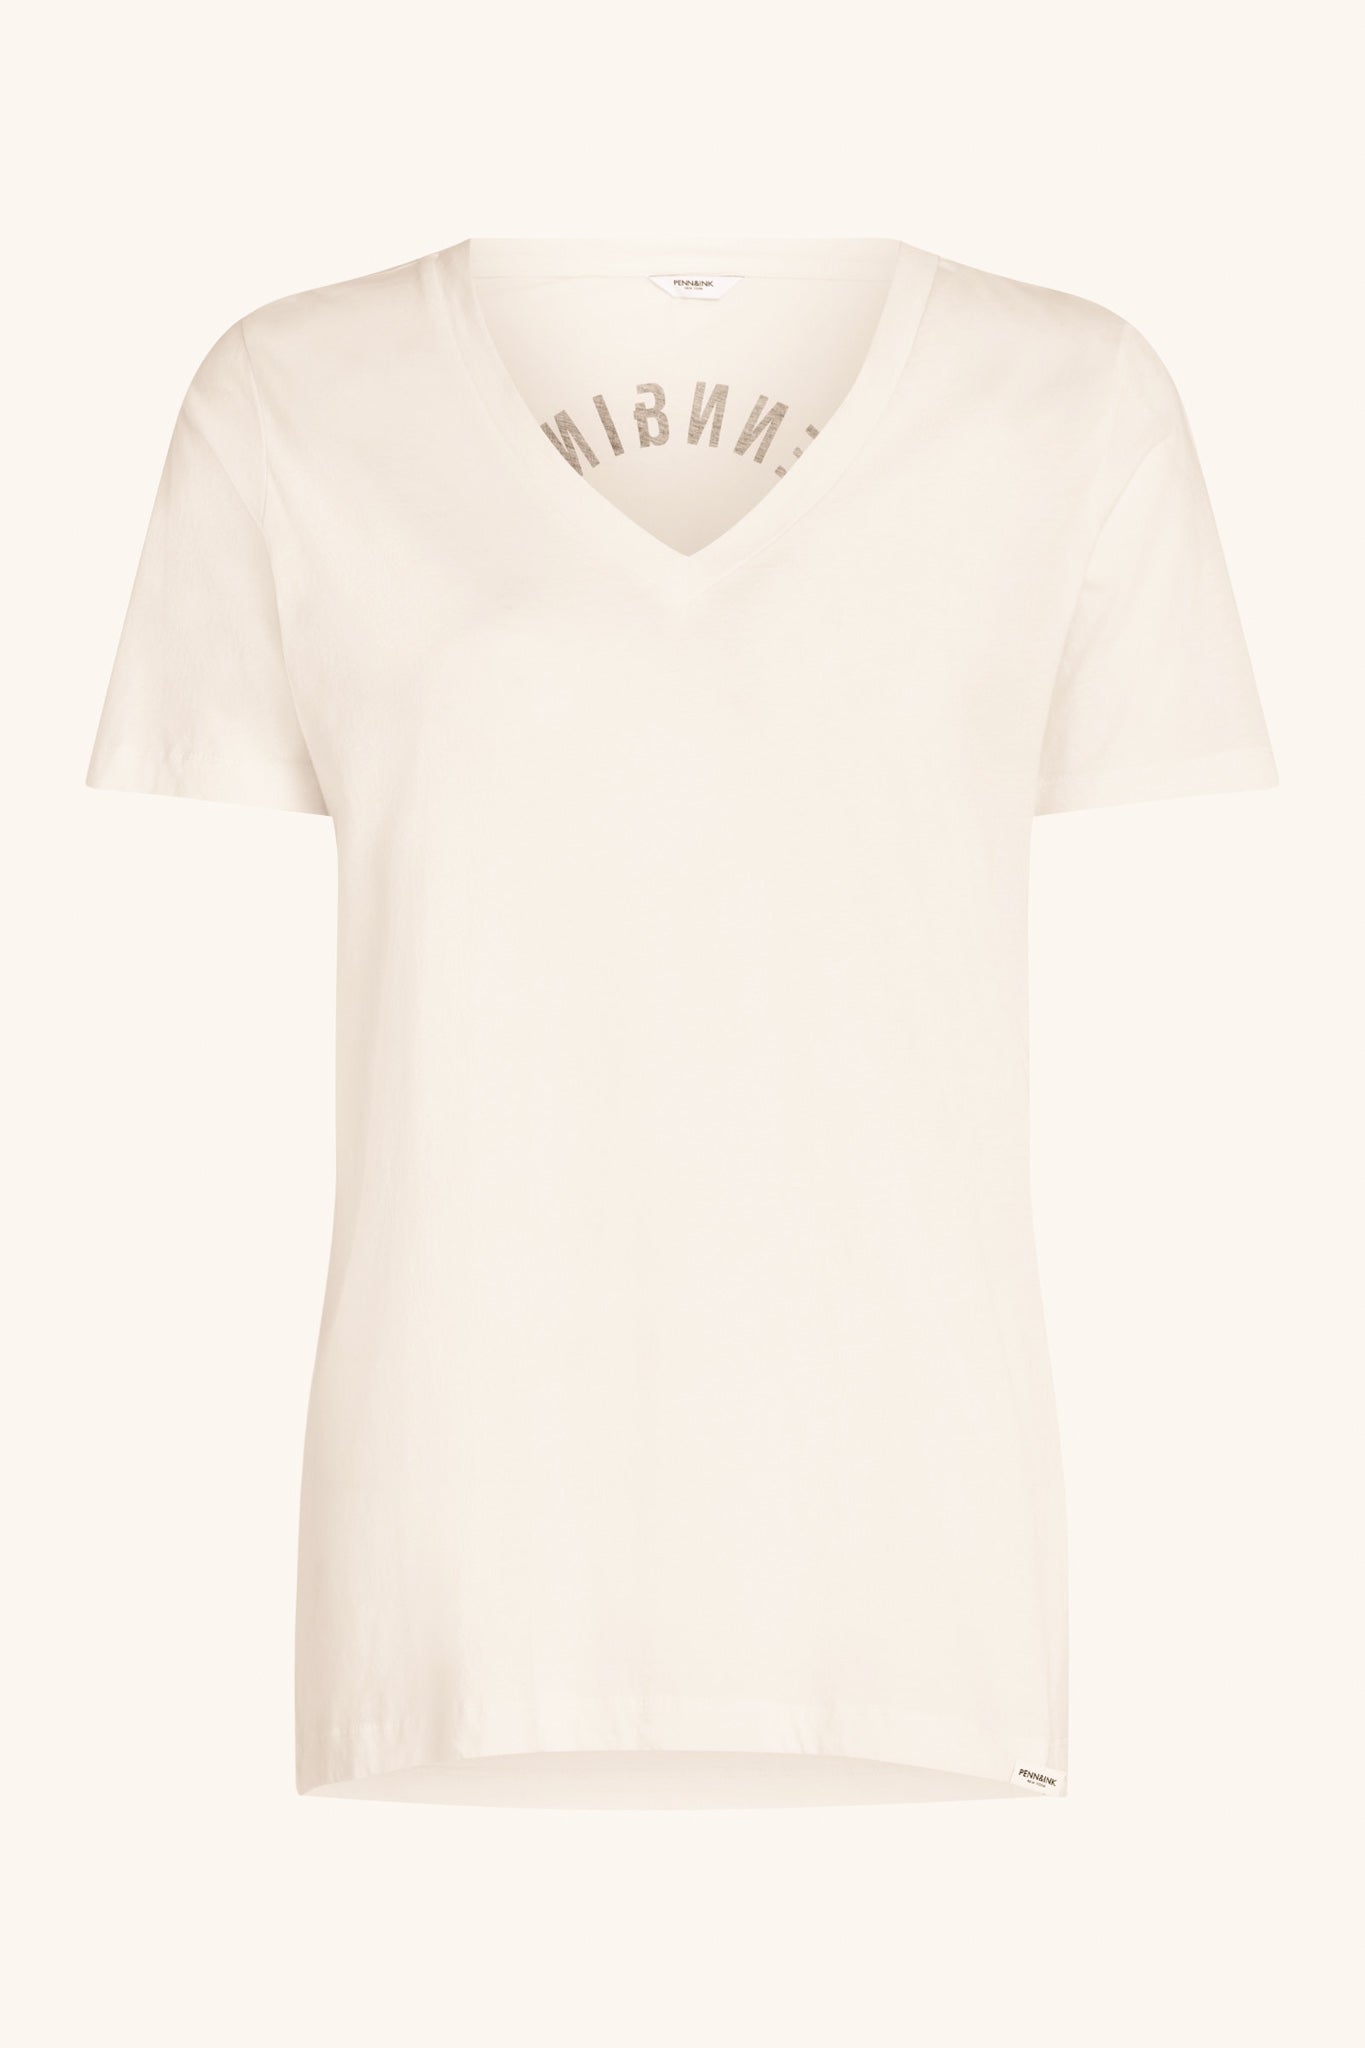 Penn&Ink N.Y - Shirt Organic Cotton S24F1429 - Ecru/Navy